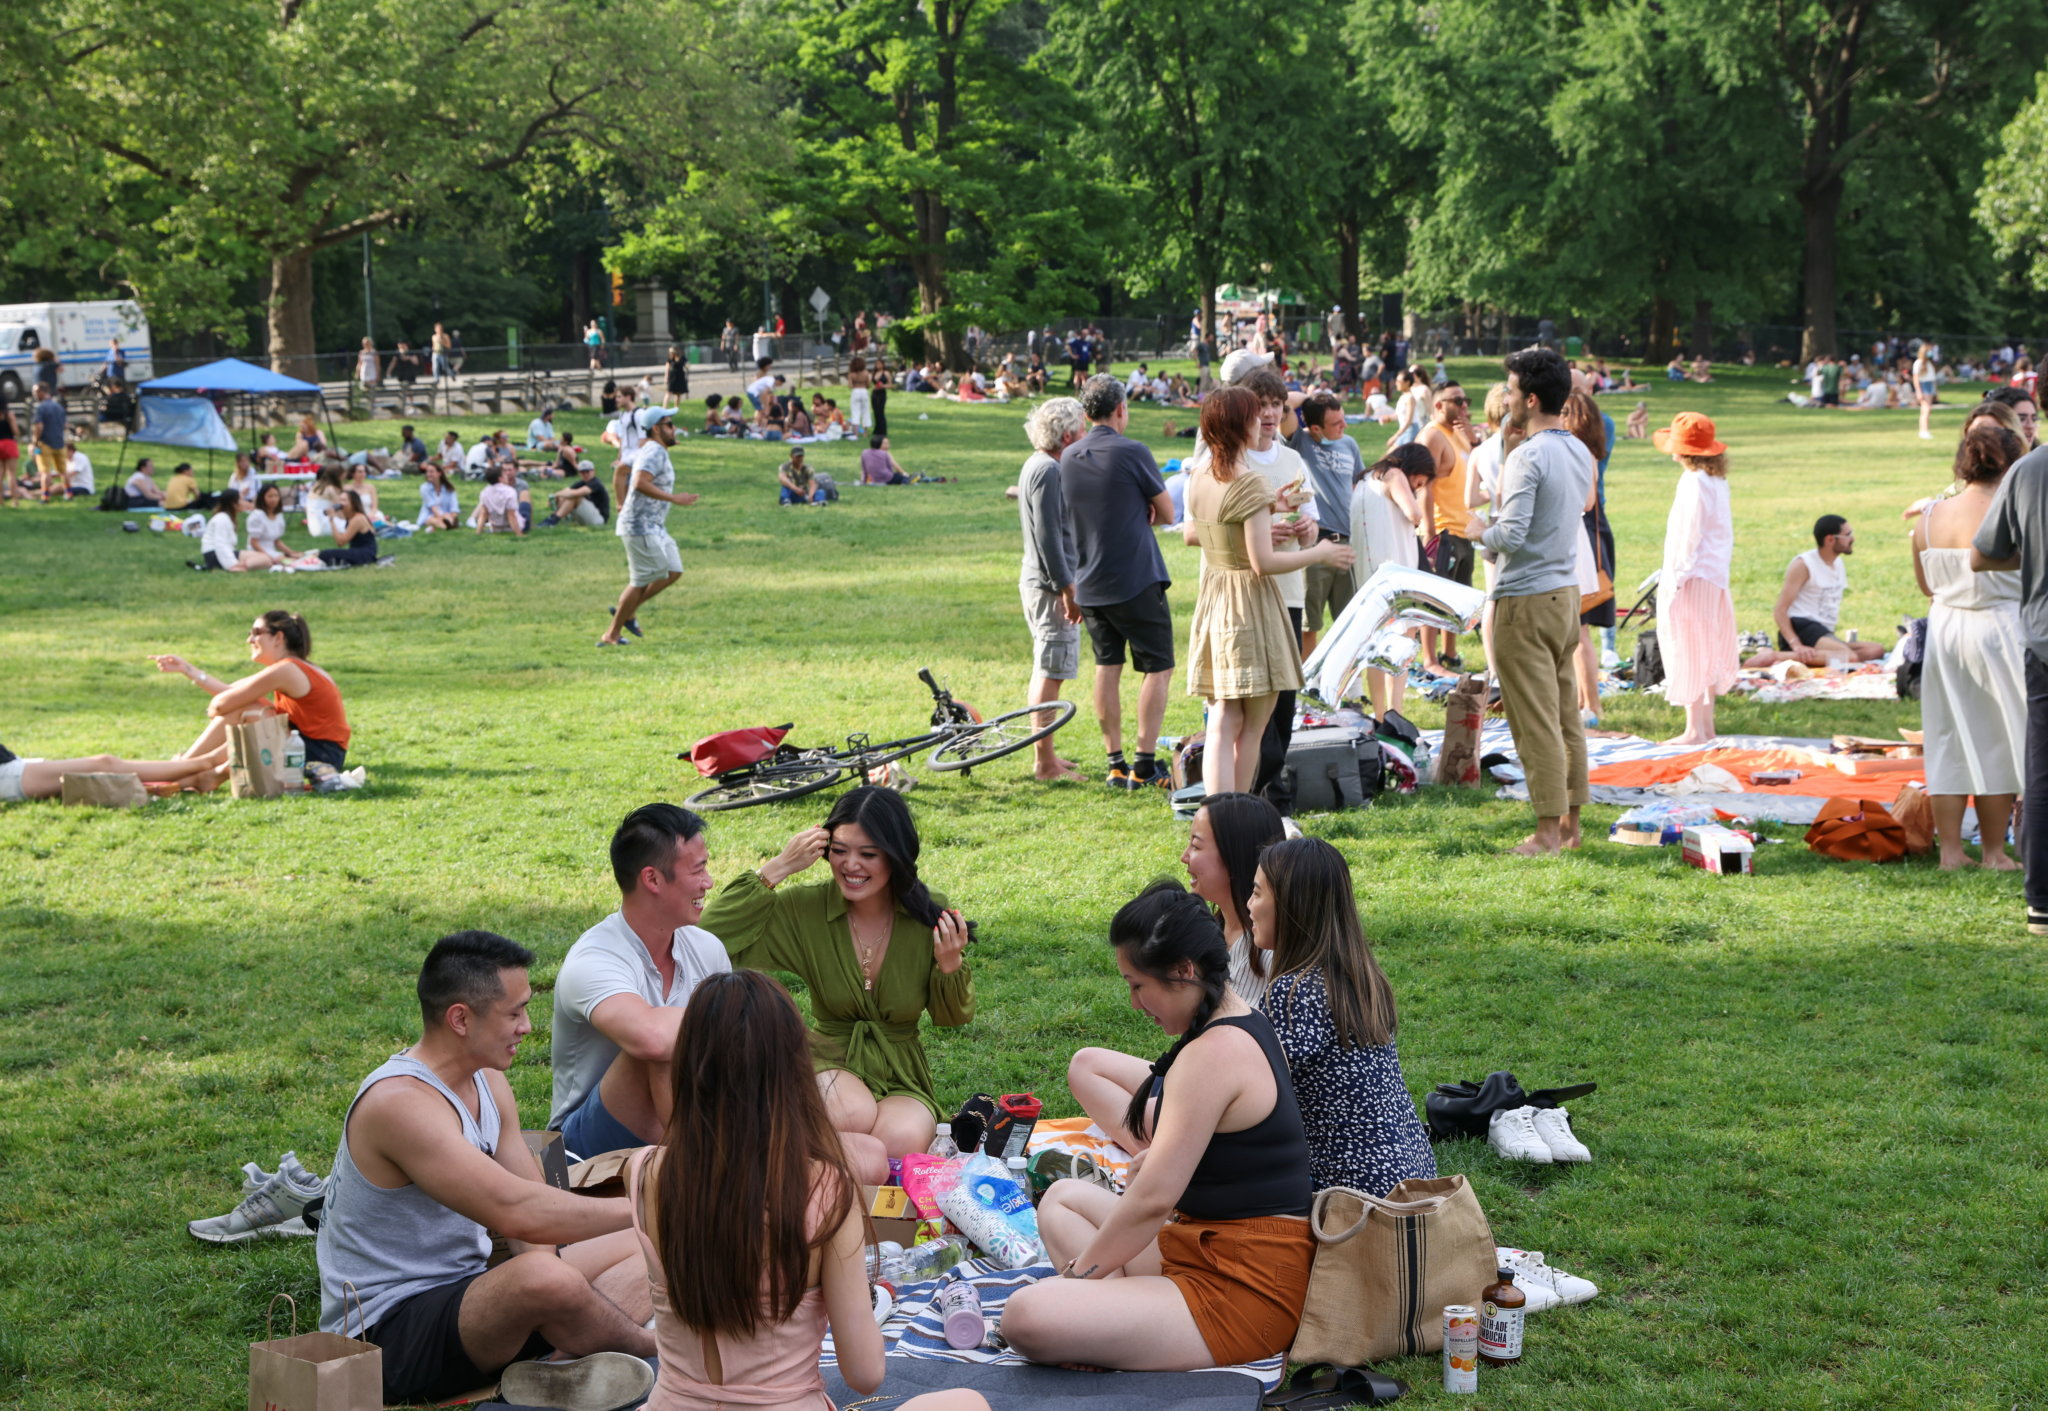 Massive Central Park comeback concert slated for August